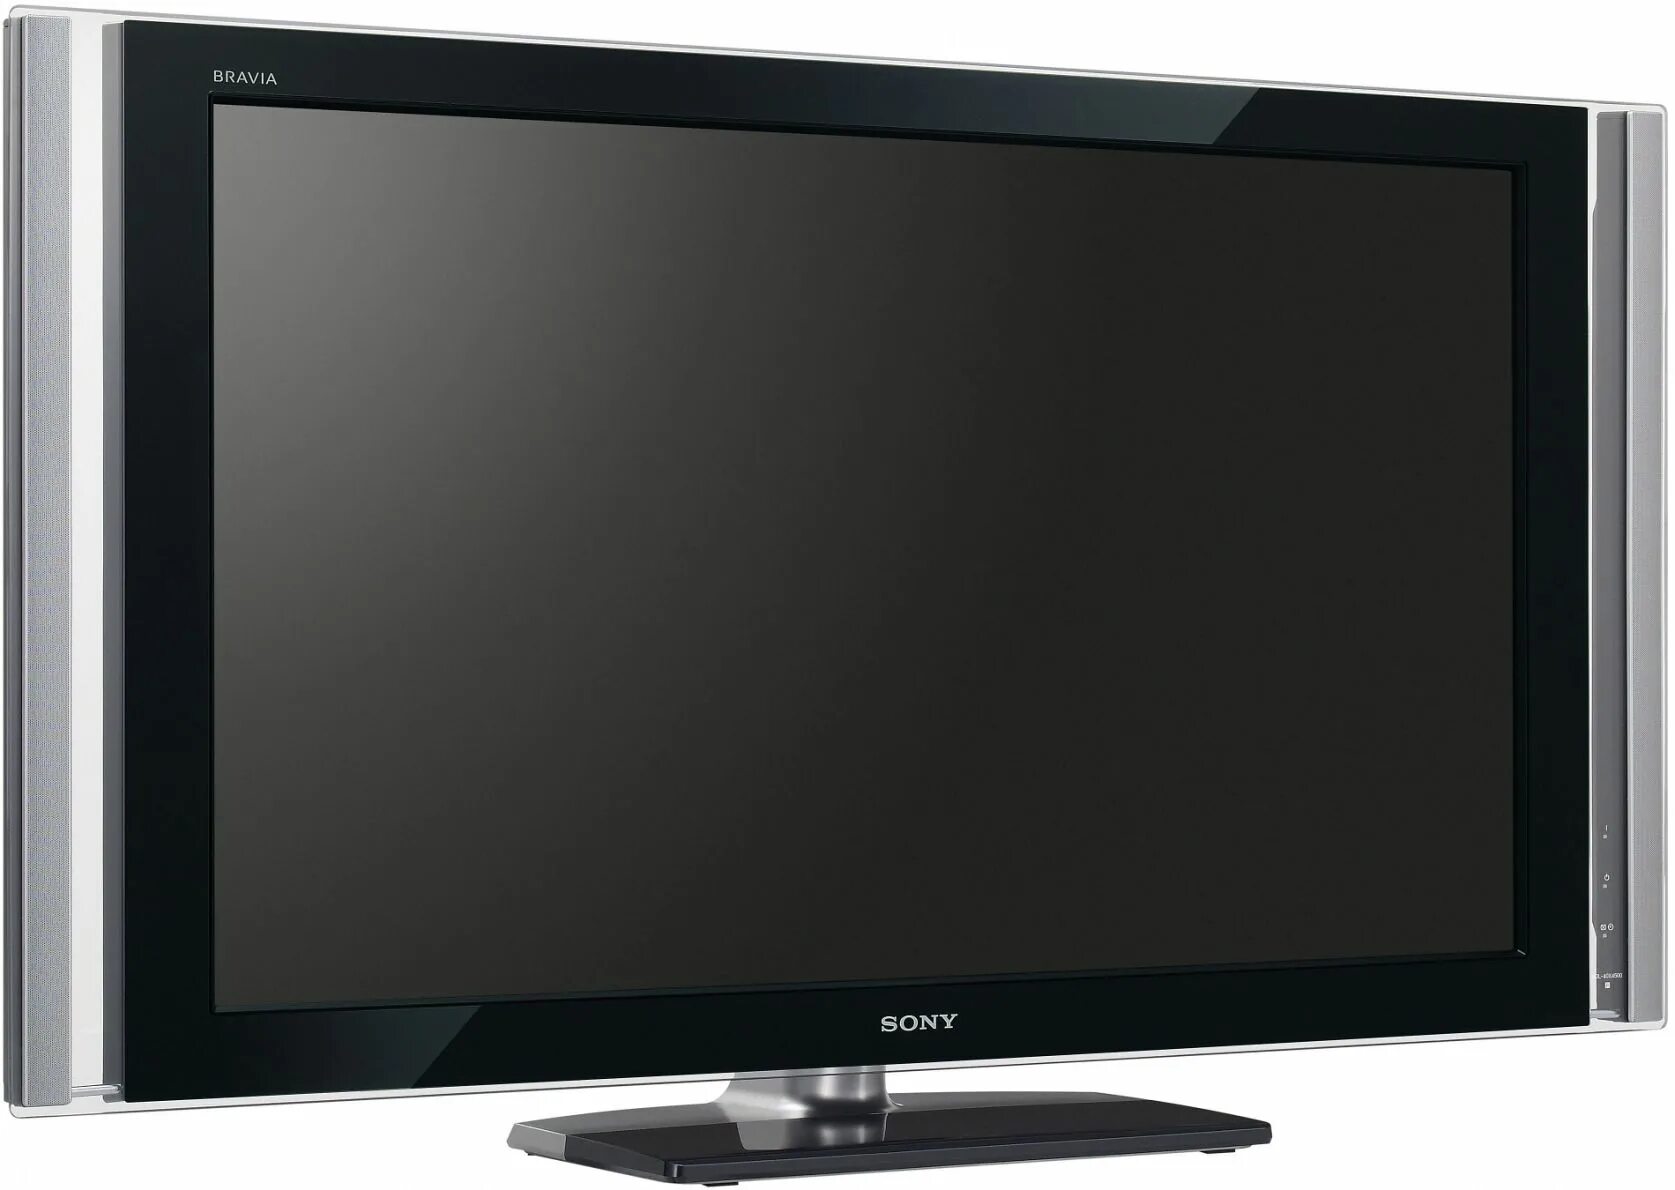 Телевизор Sony Bravia KLV-26nx400. KDL 40x4500. Sony 26nx400. Телевизор Sony KLV 26 NX 400. Недорогие телевизоры вологда